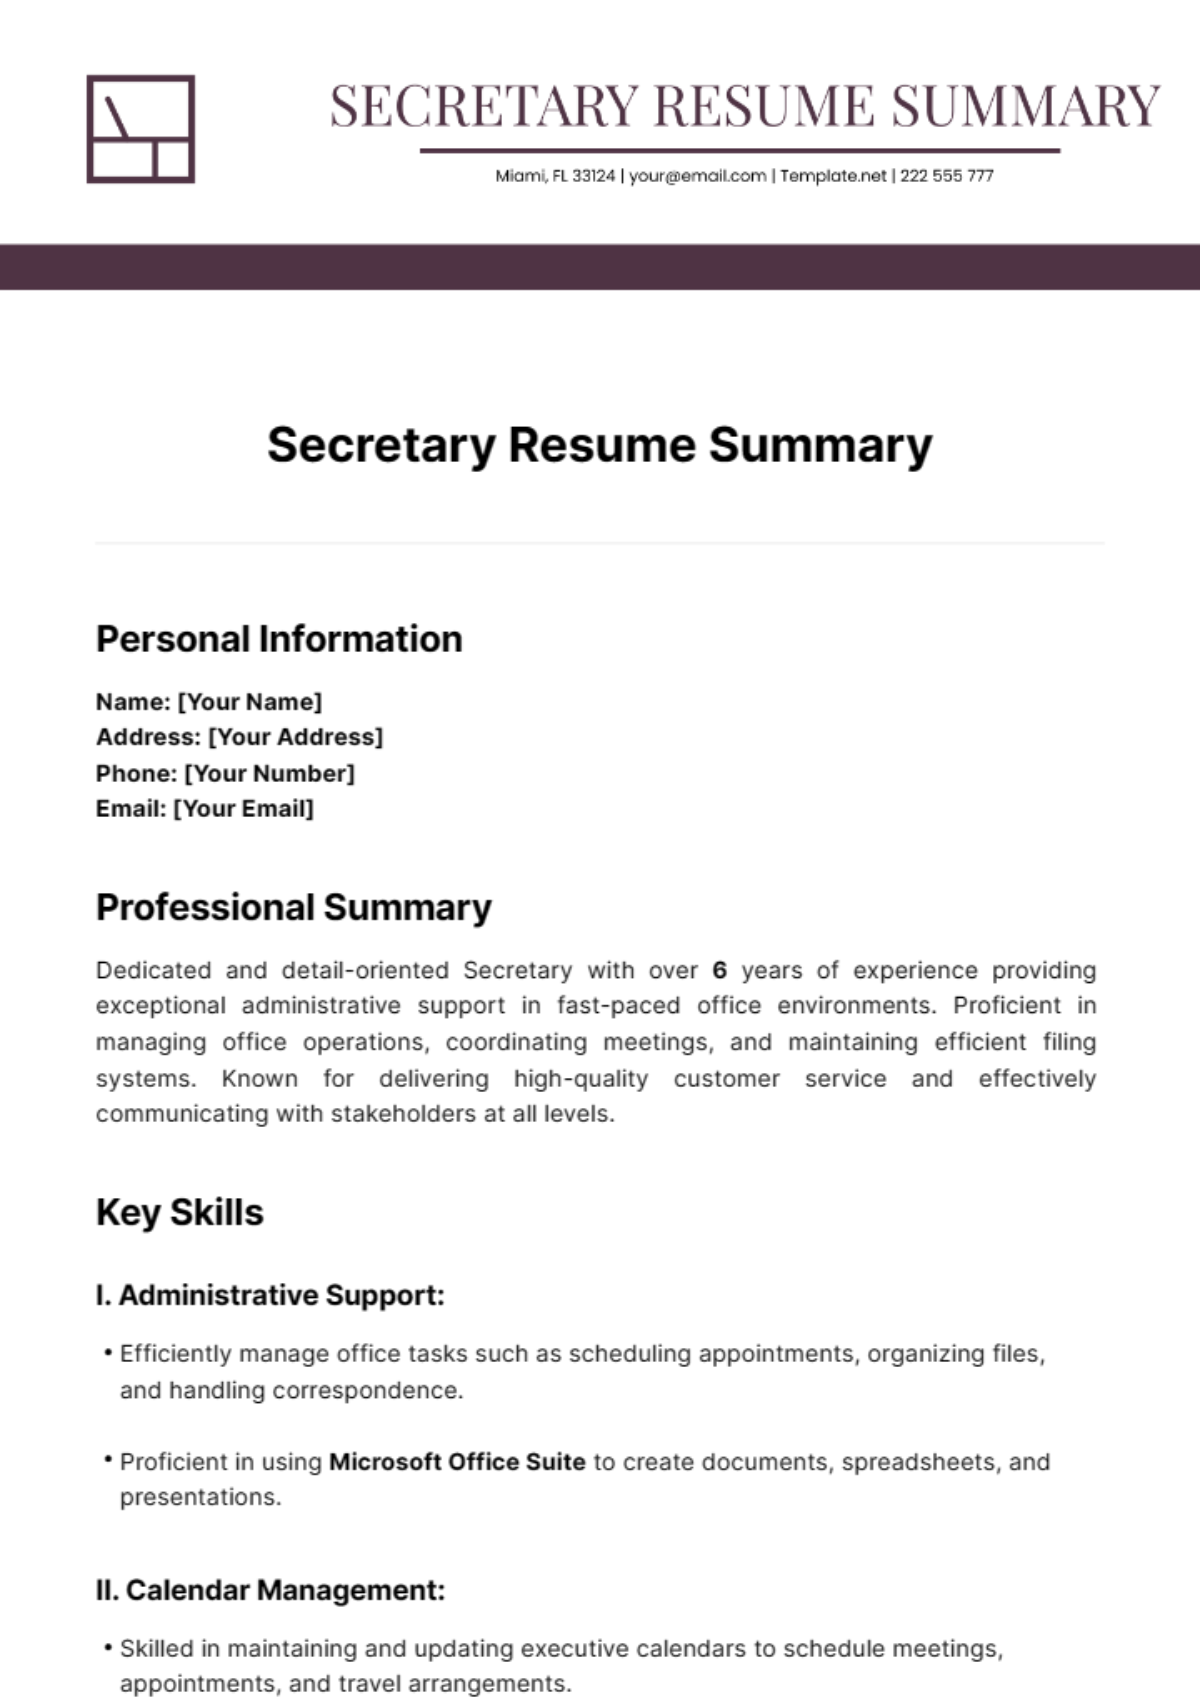 Secretary Resume Summary Template